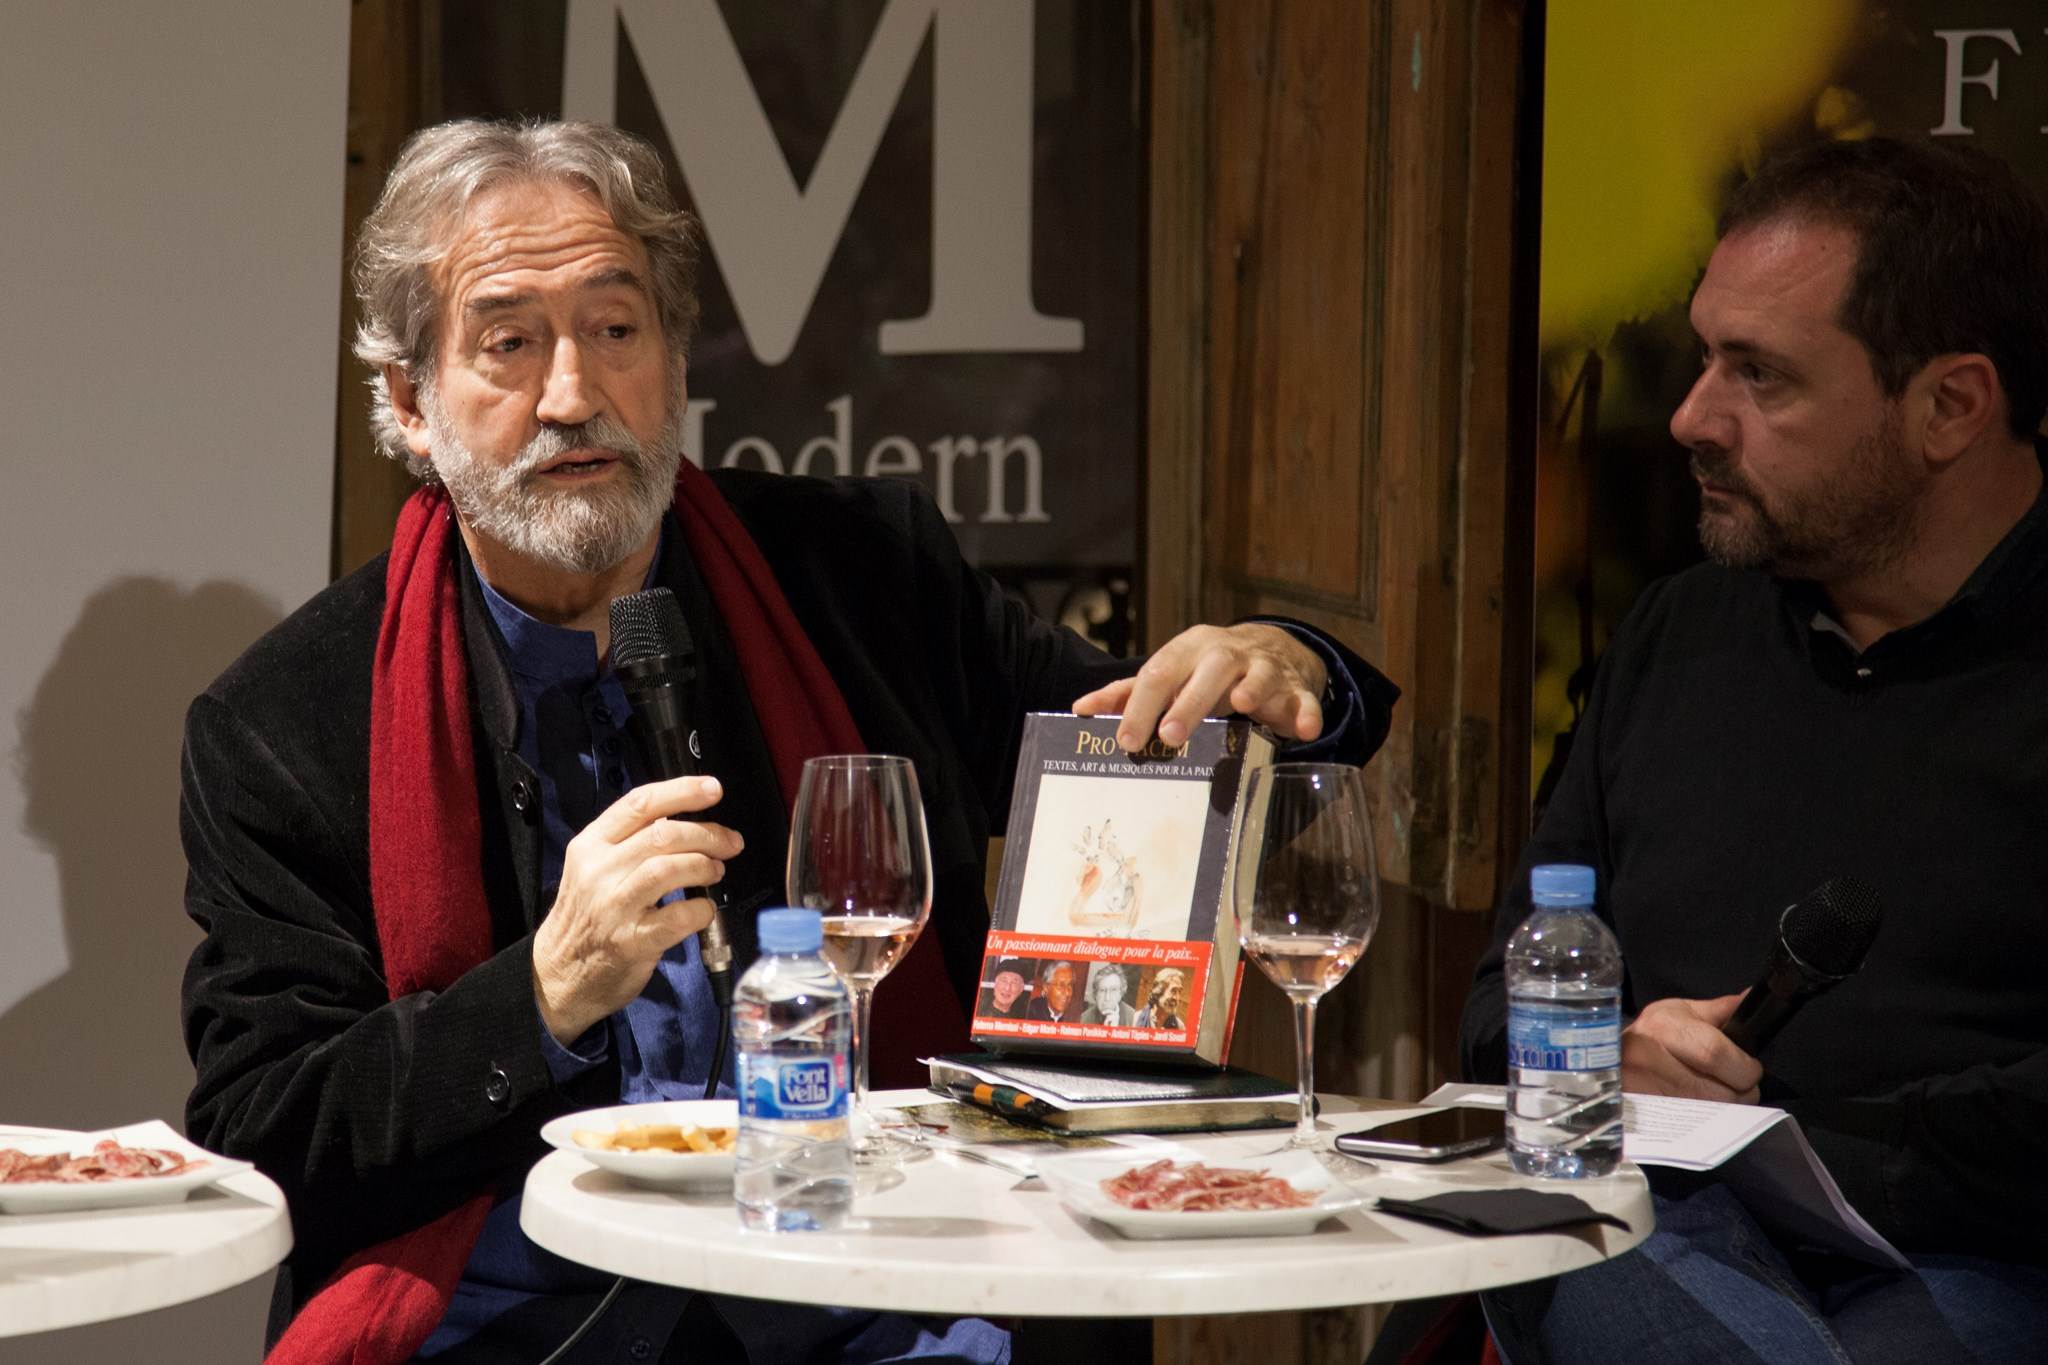  #VisàVis amb Jordi Savall i el celler Domènech Vidal 